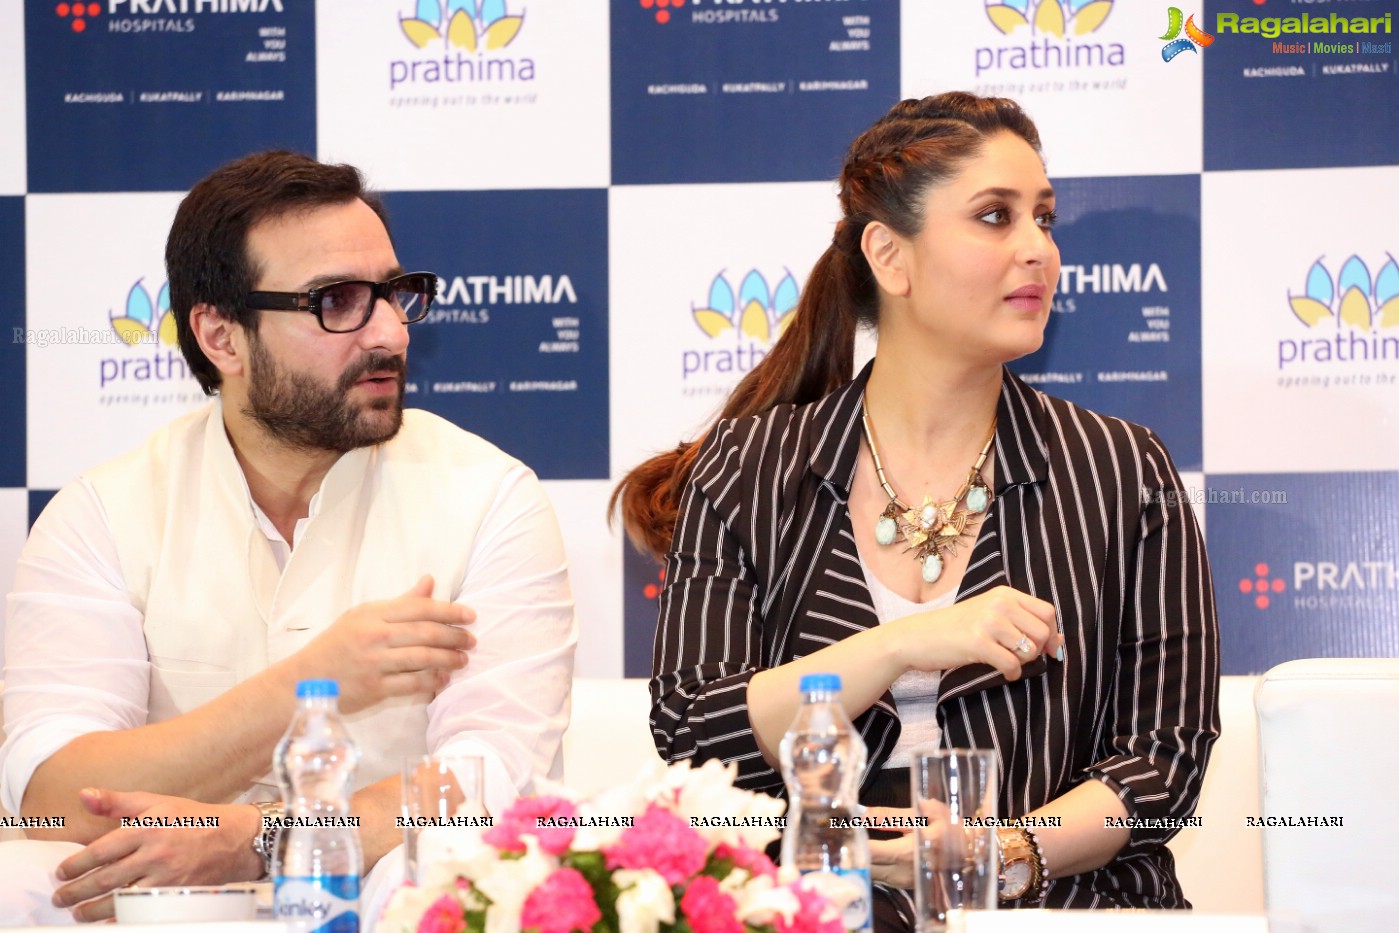 Saif Ali Khan and Kareena Kapoor at Prathima Hospitals Brand Ambassador Announcement